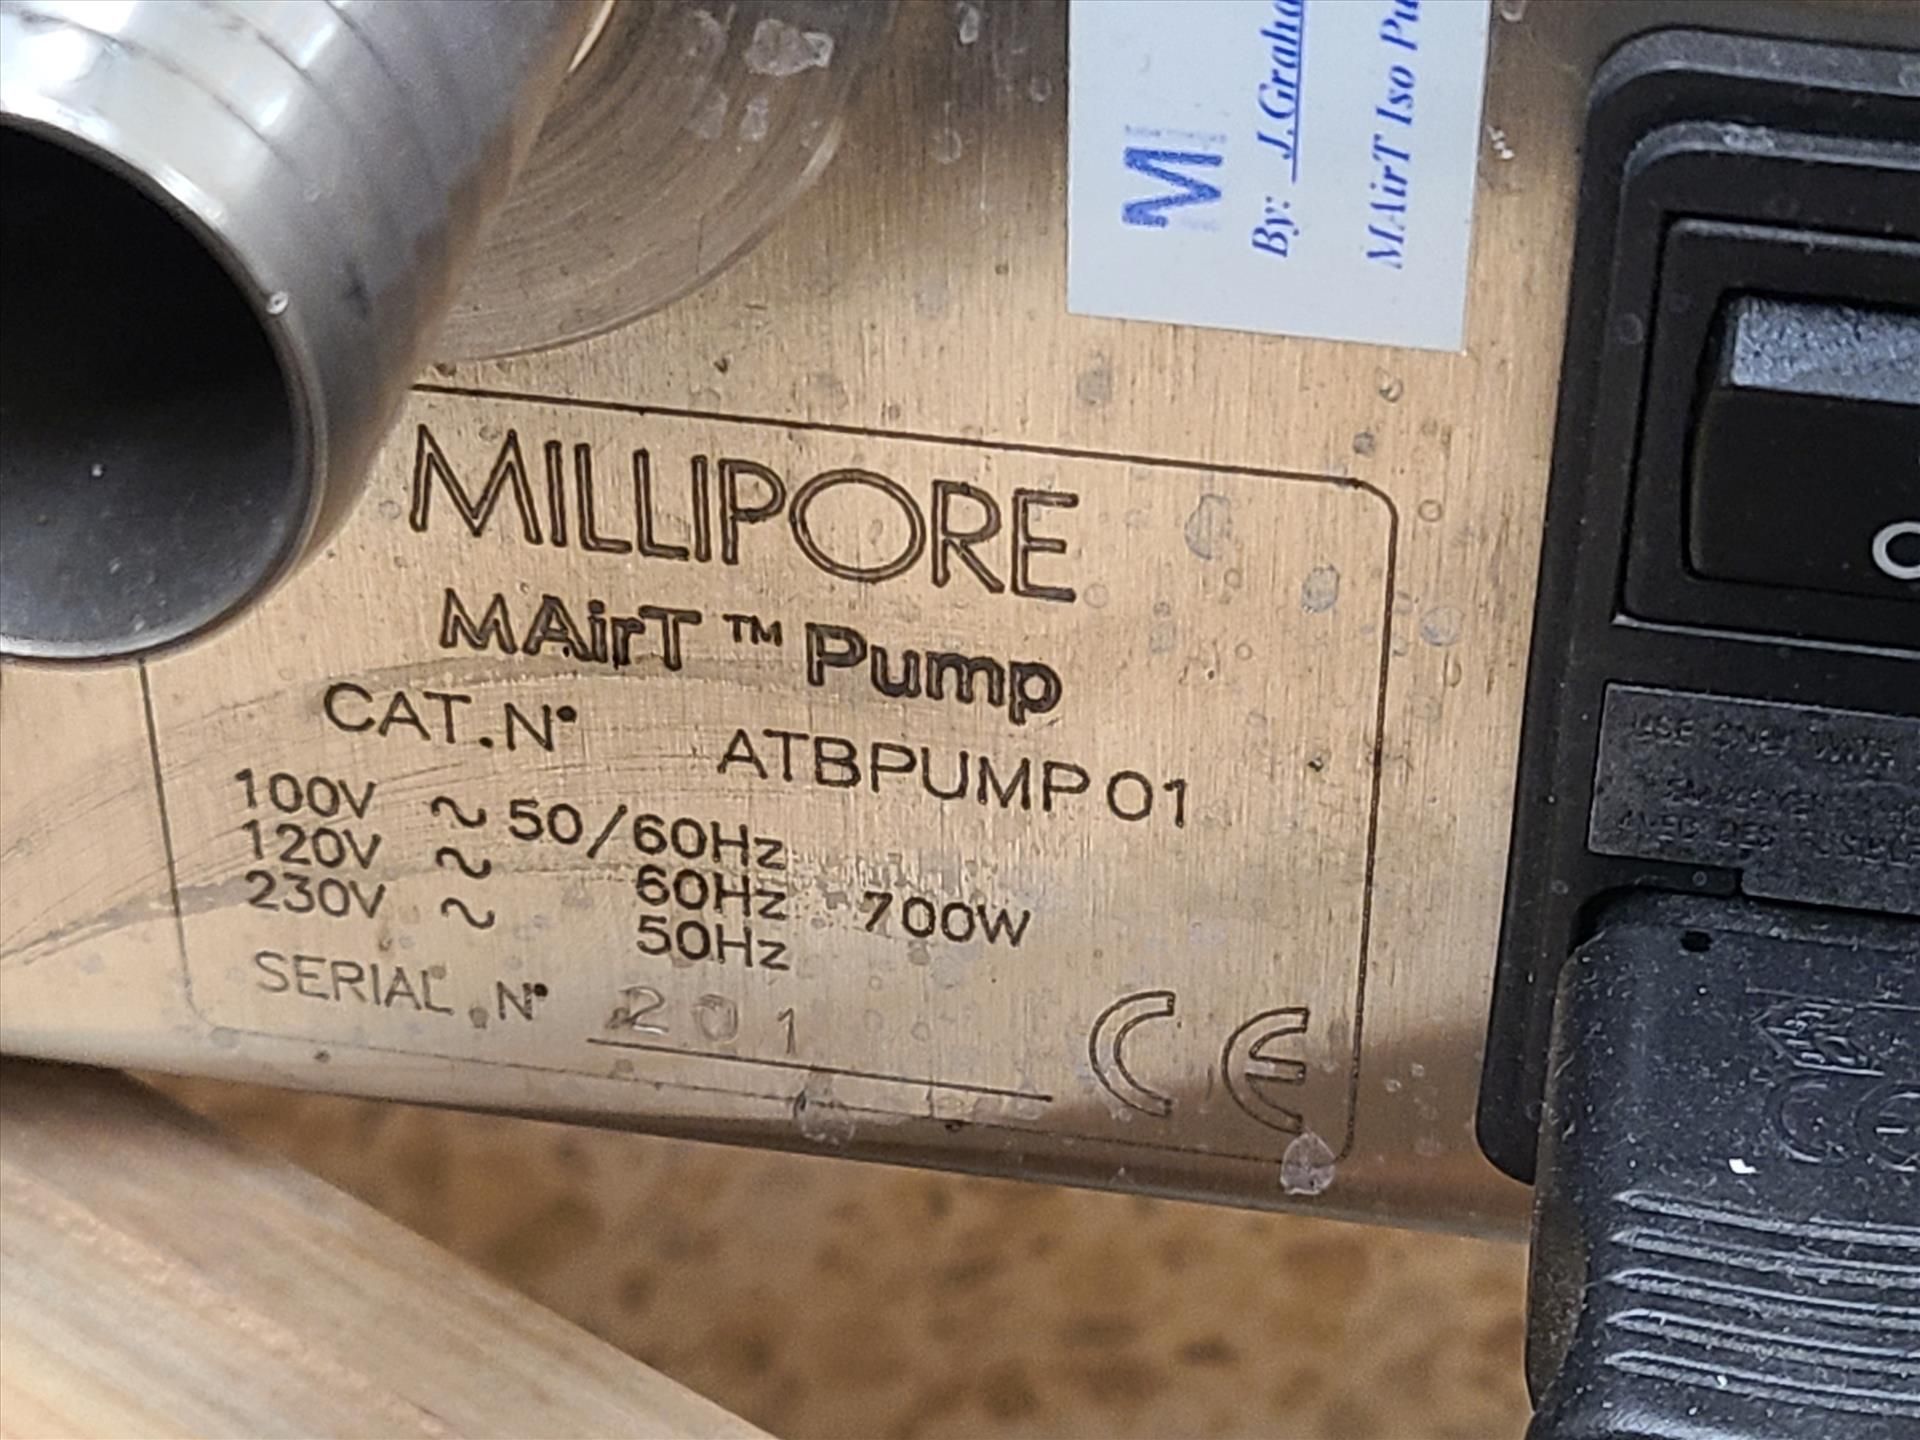 Millipore MAirT Isolator Pump, ser. no. 201, 100-230 volts, 50/60 Hz - Image 3 of 3